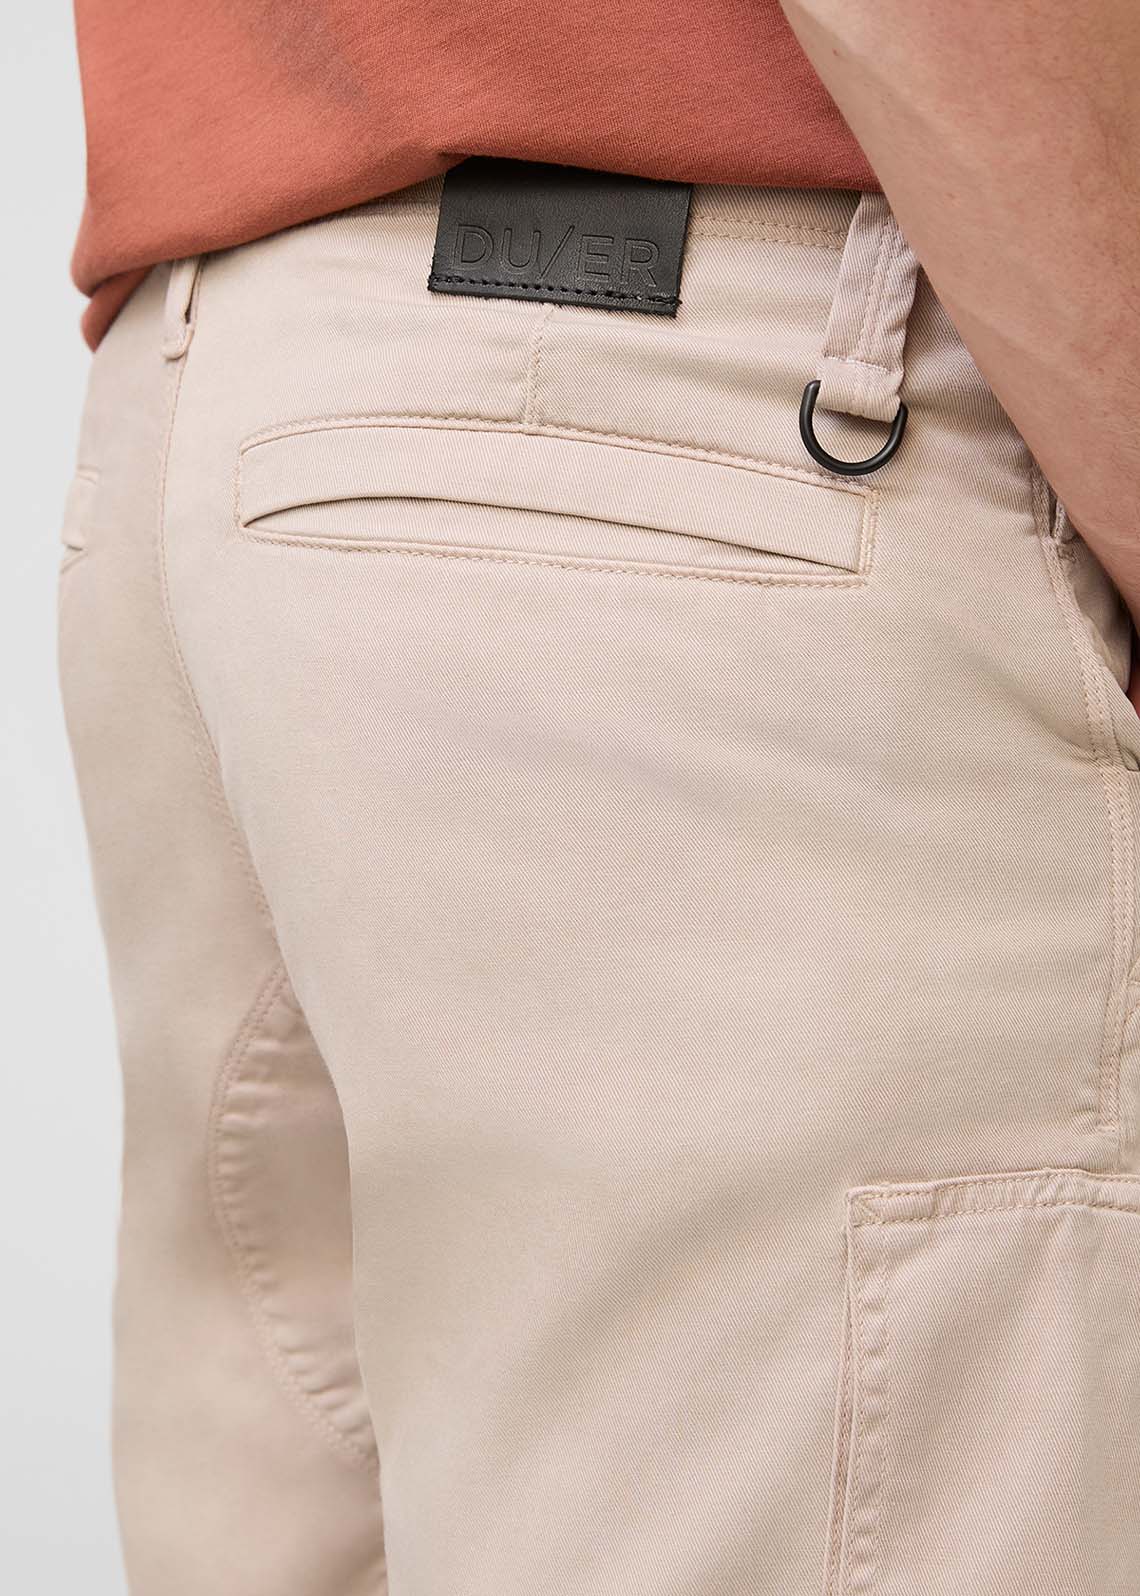 mens beige athletic adventure short back pocket and key ring